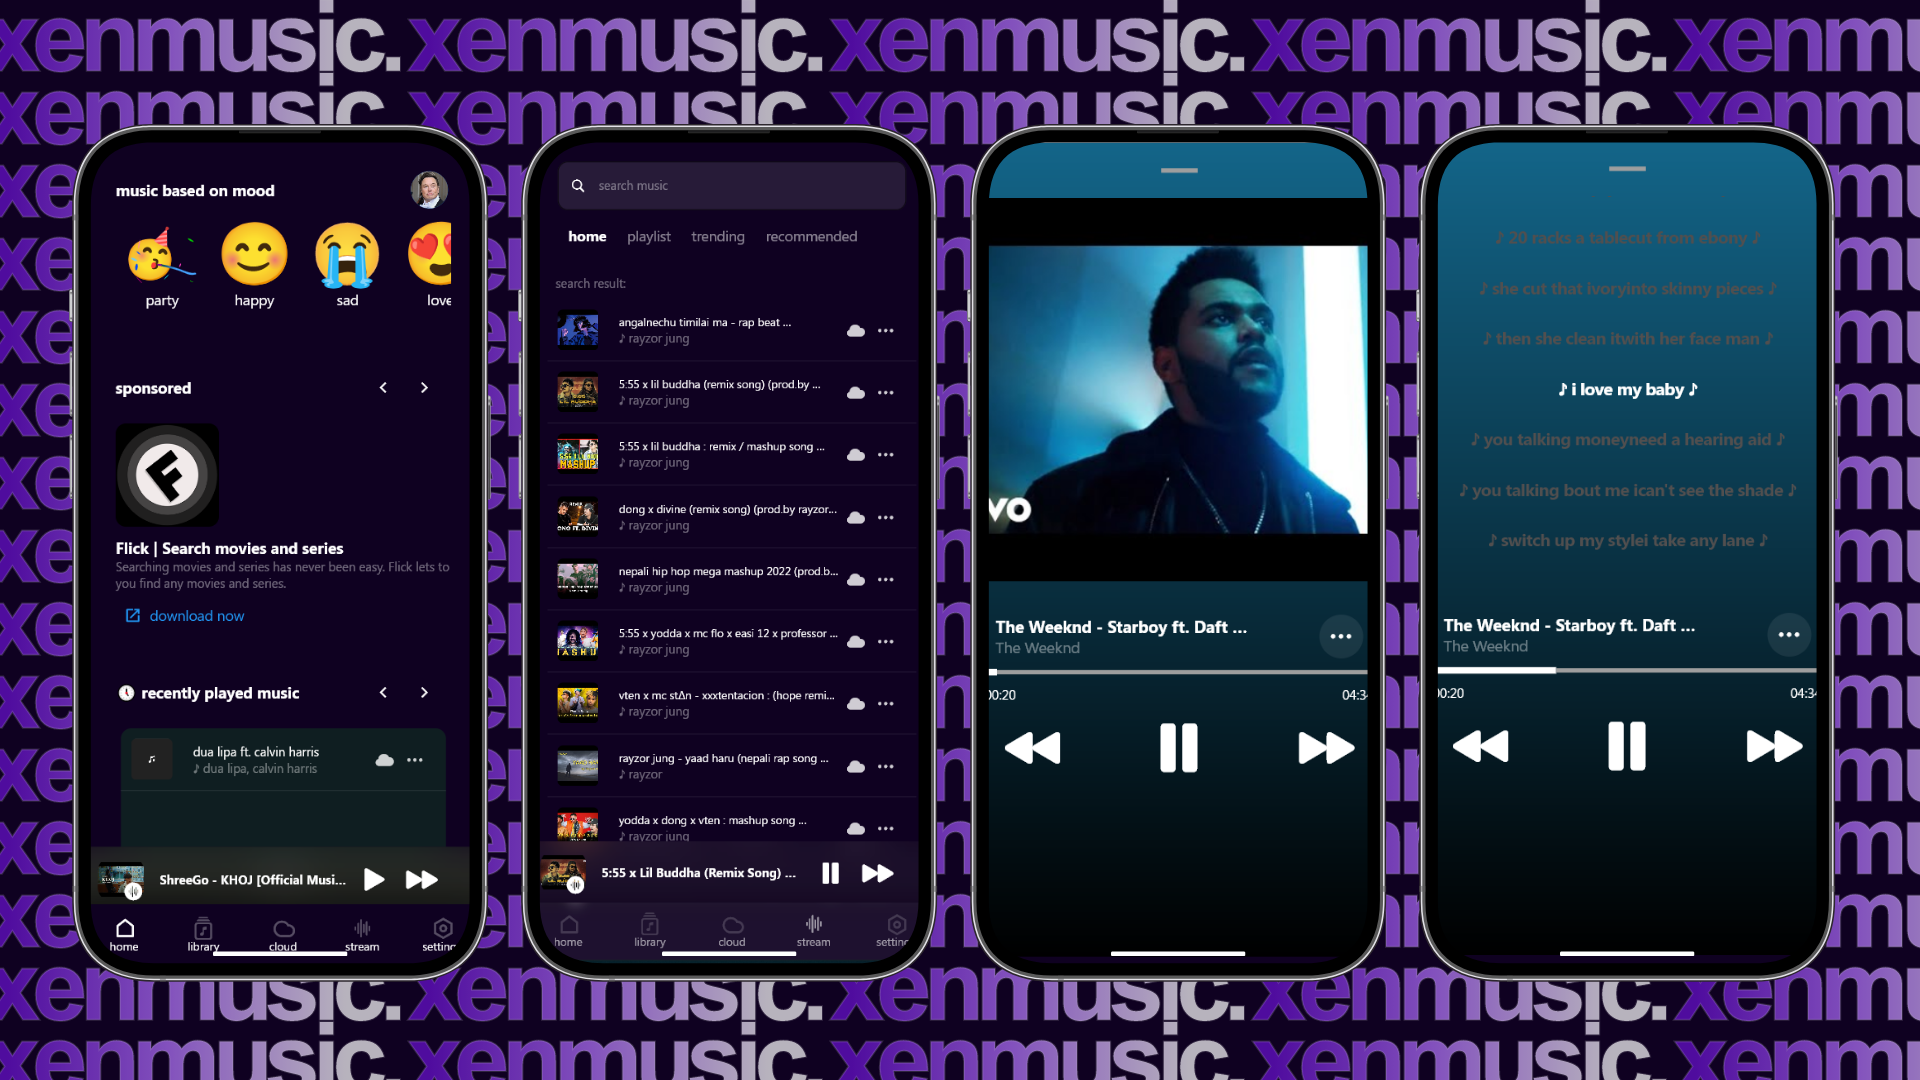 xenmusic screenshots